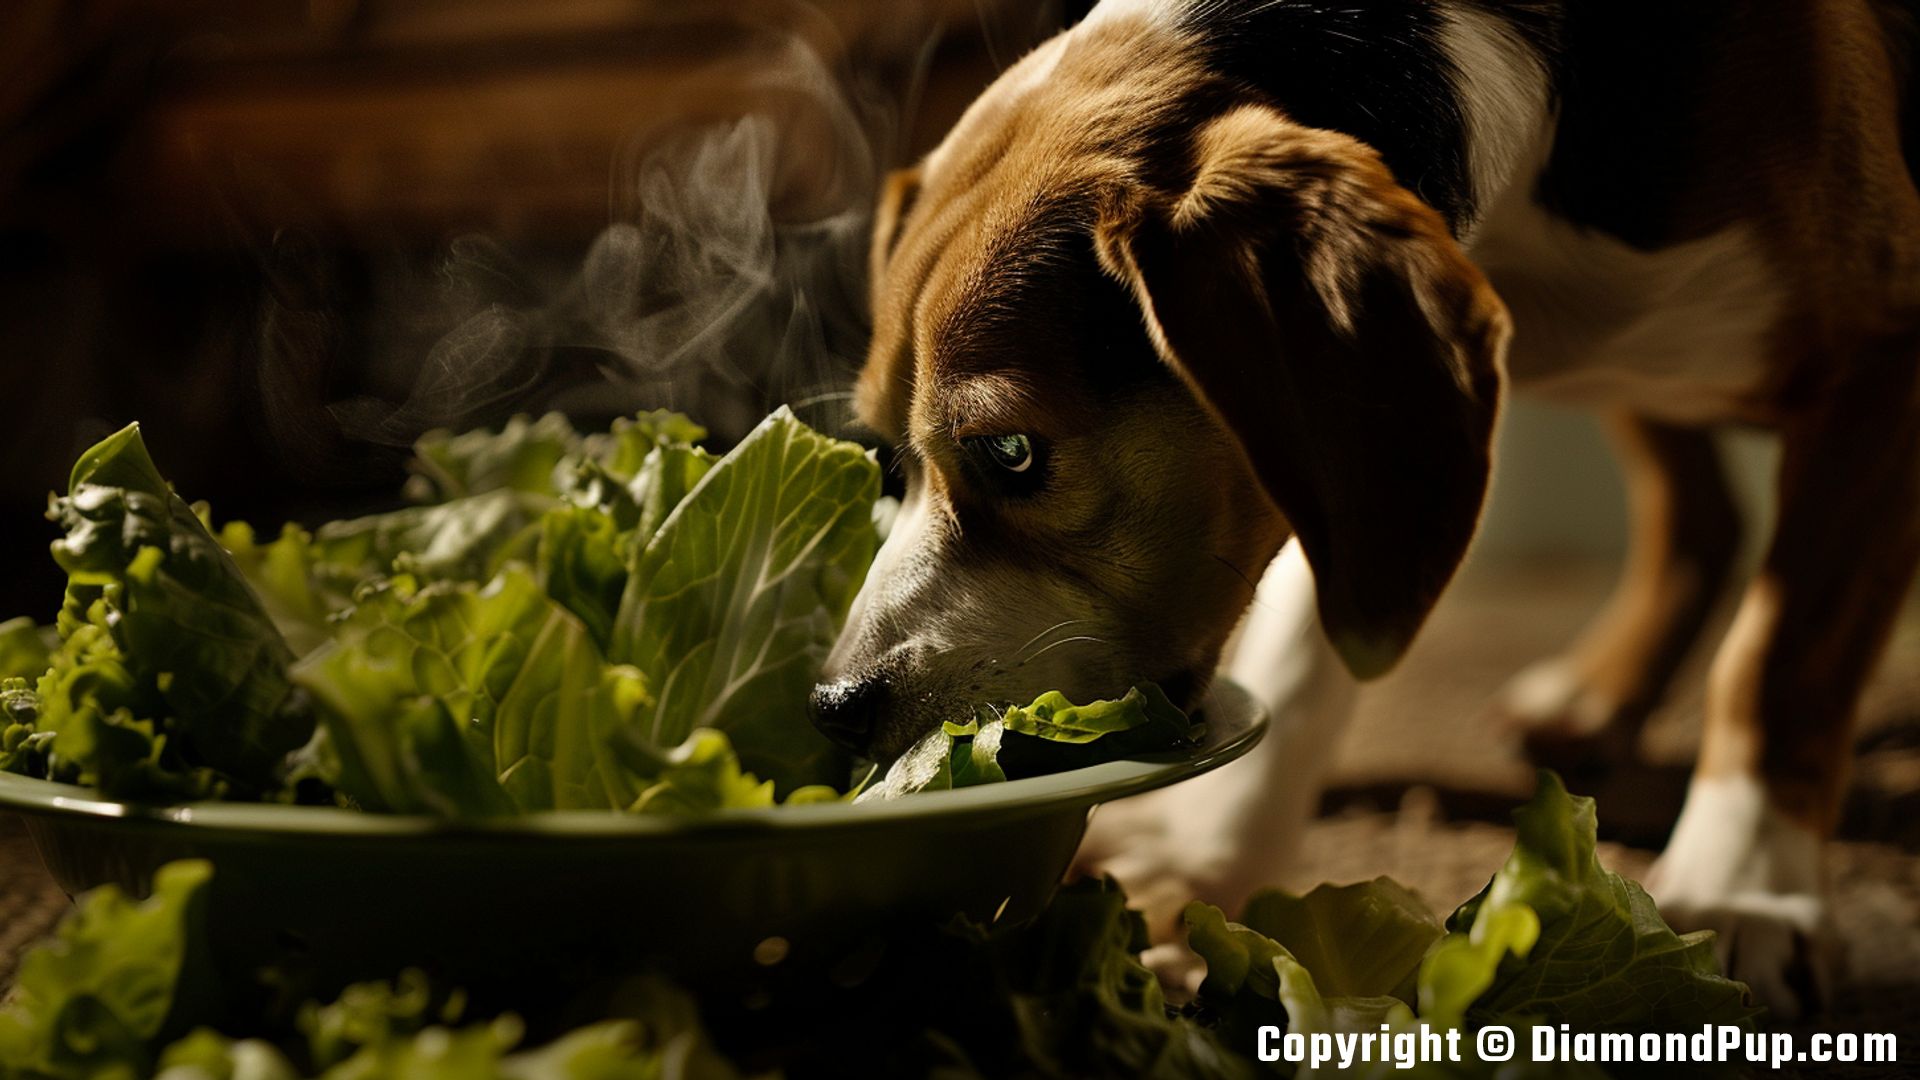 Image of Beagle Snacking on Lettuce